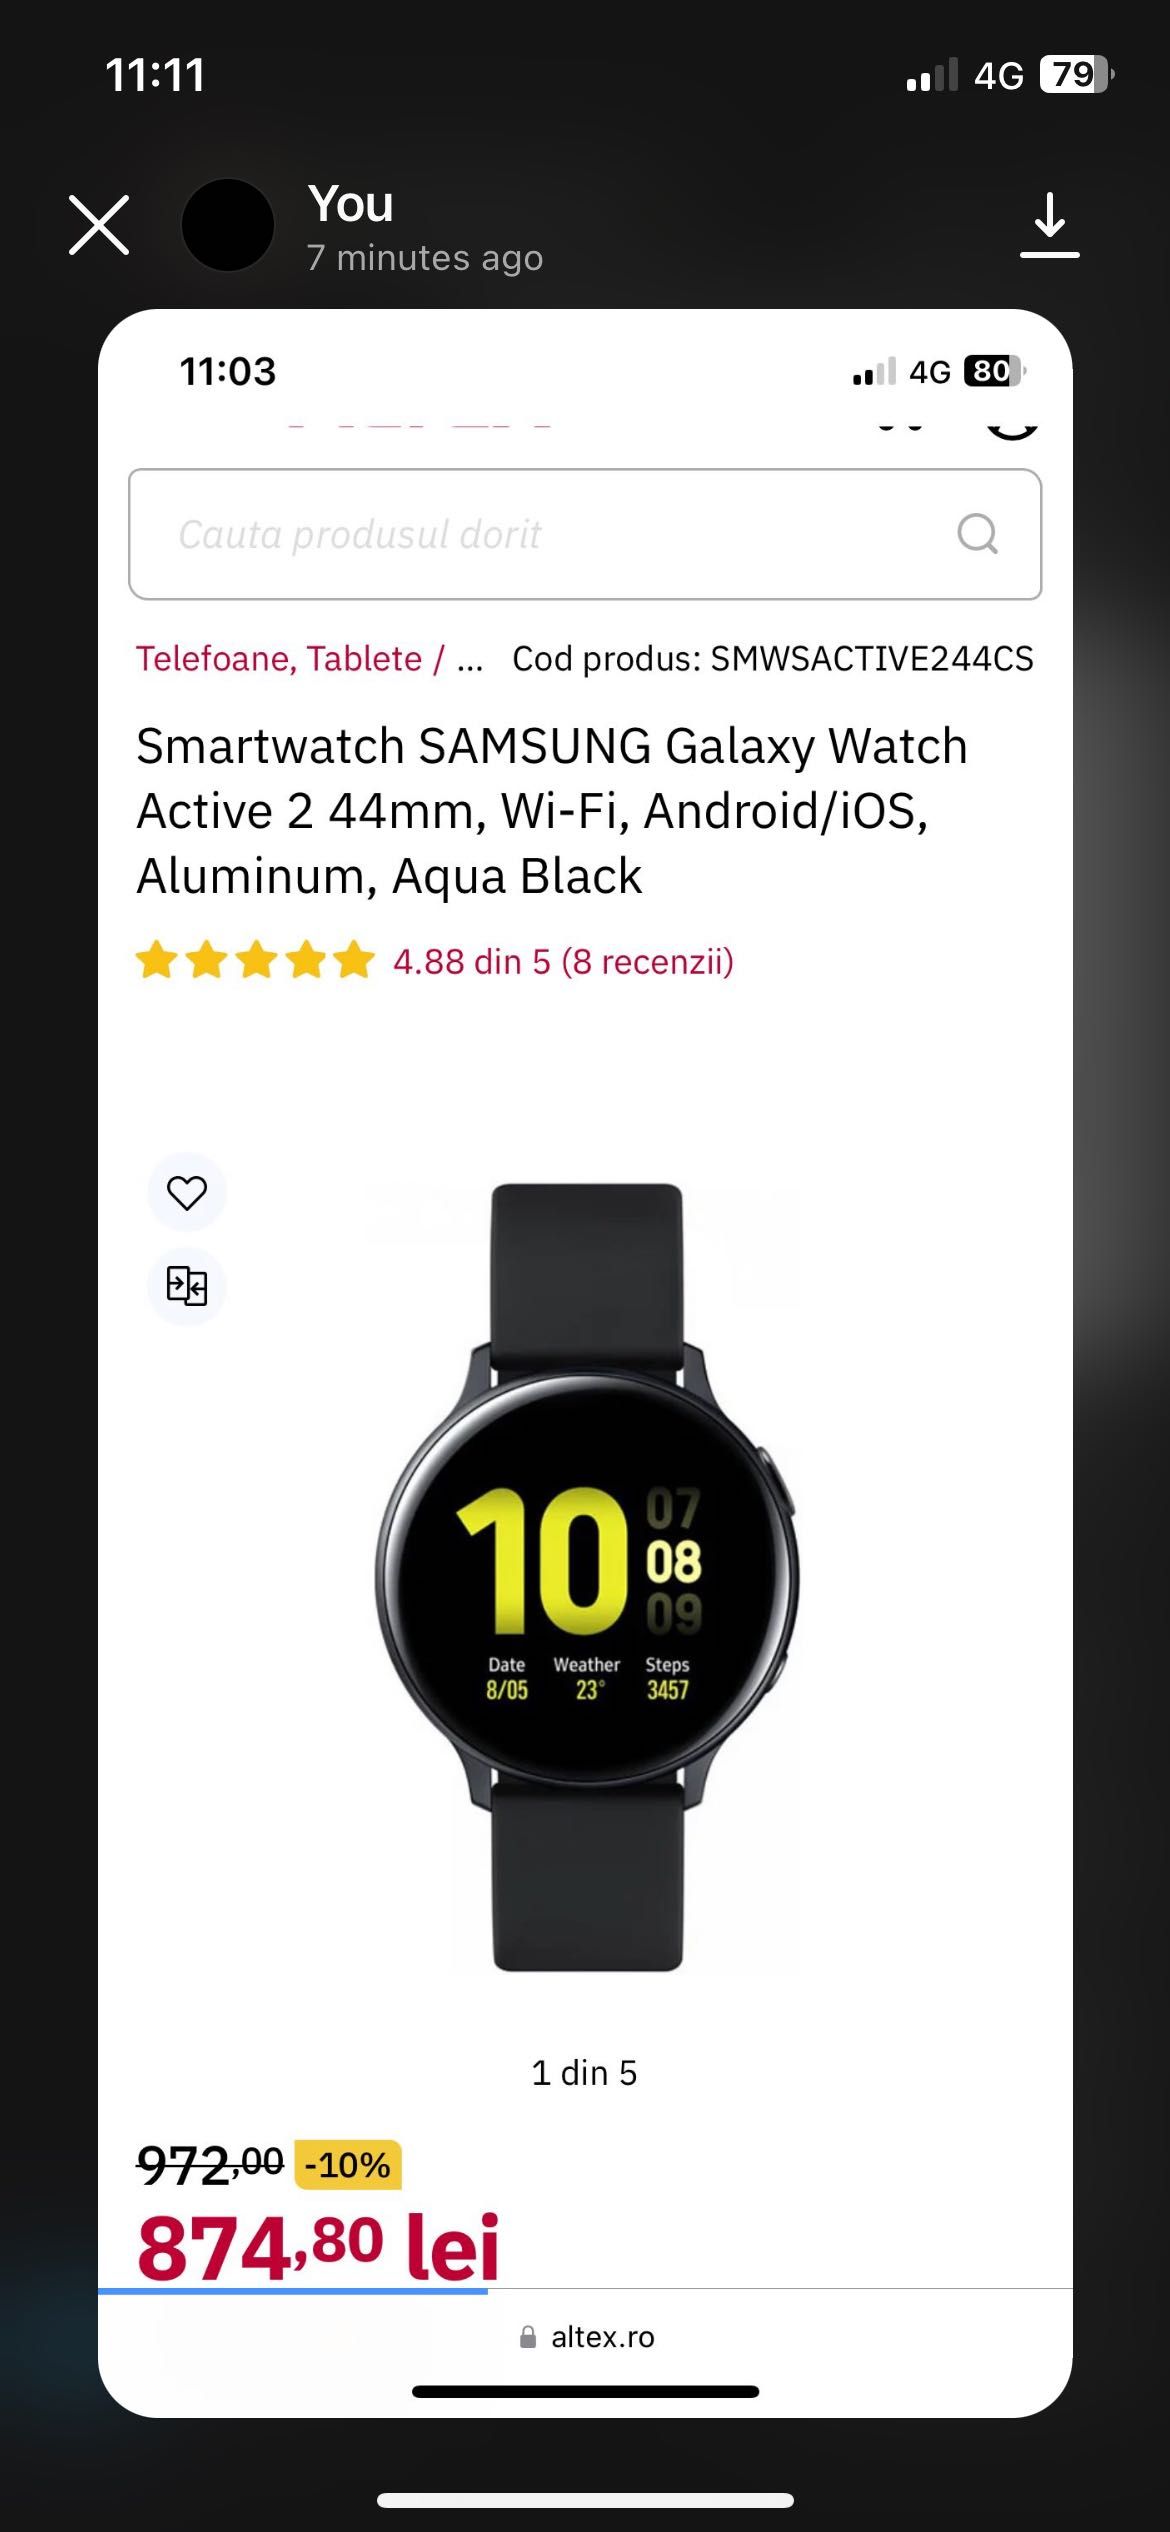 Smartwatch SAMSUNG Galaxy Watch
Active 2 44mm, Wi-Fi, Aluminum